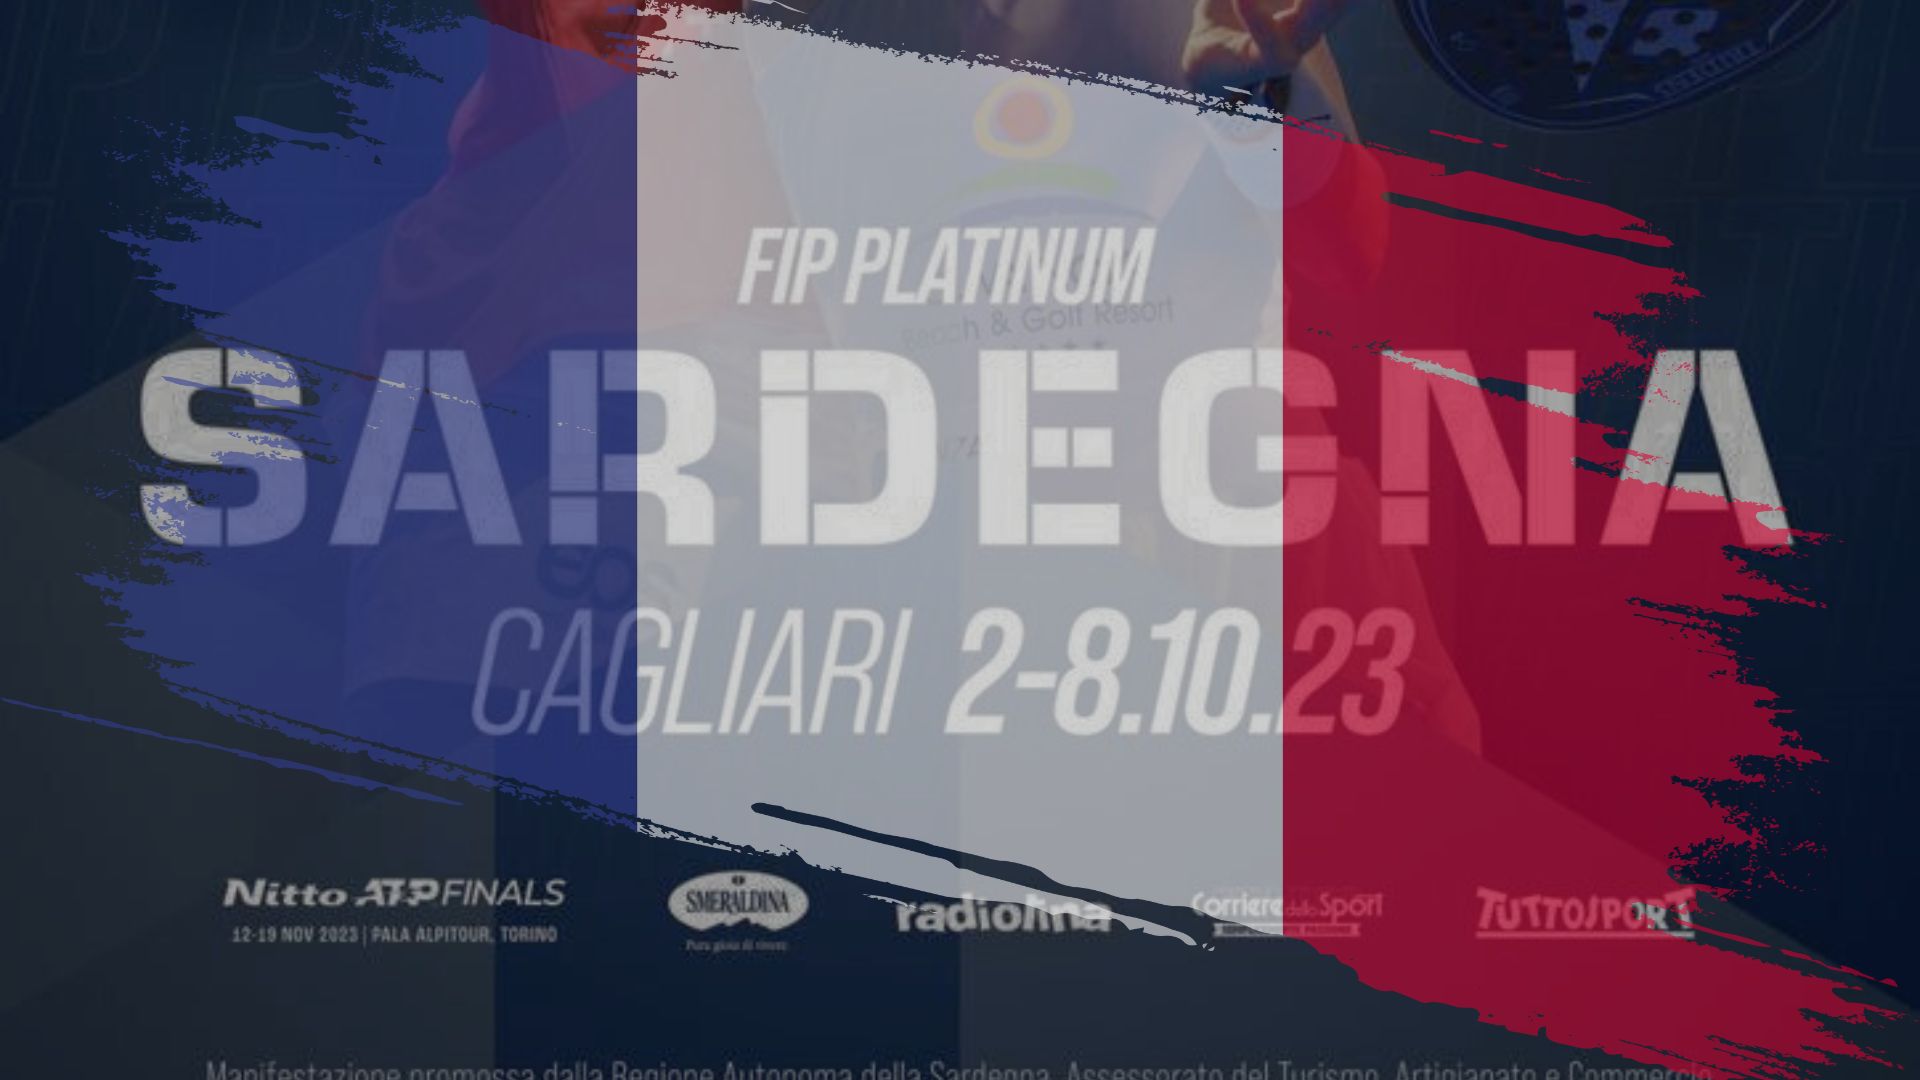 FIP Platinum Sardinien fransk